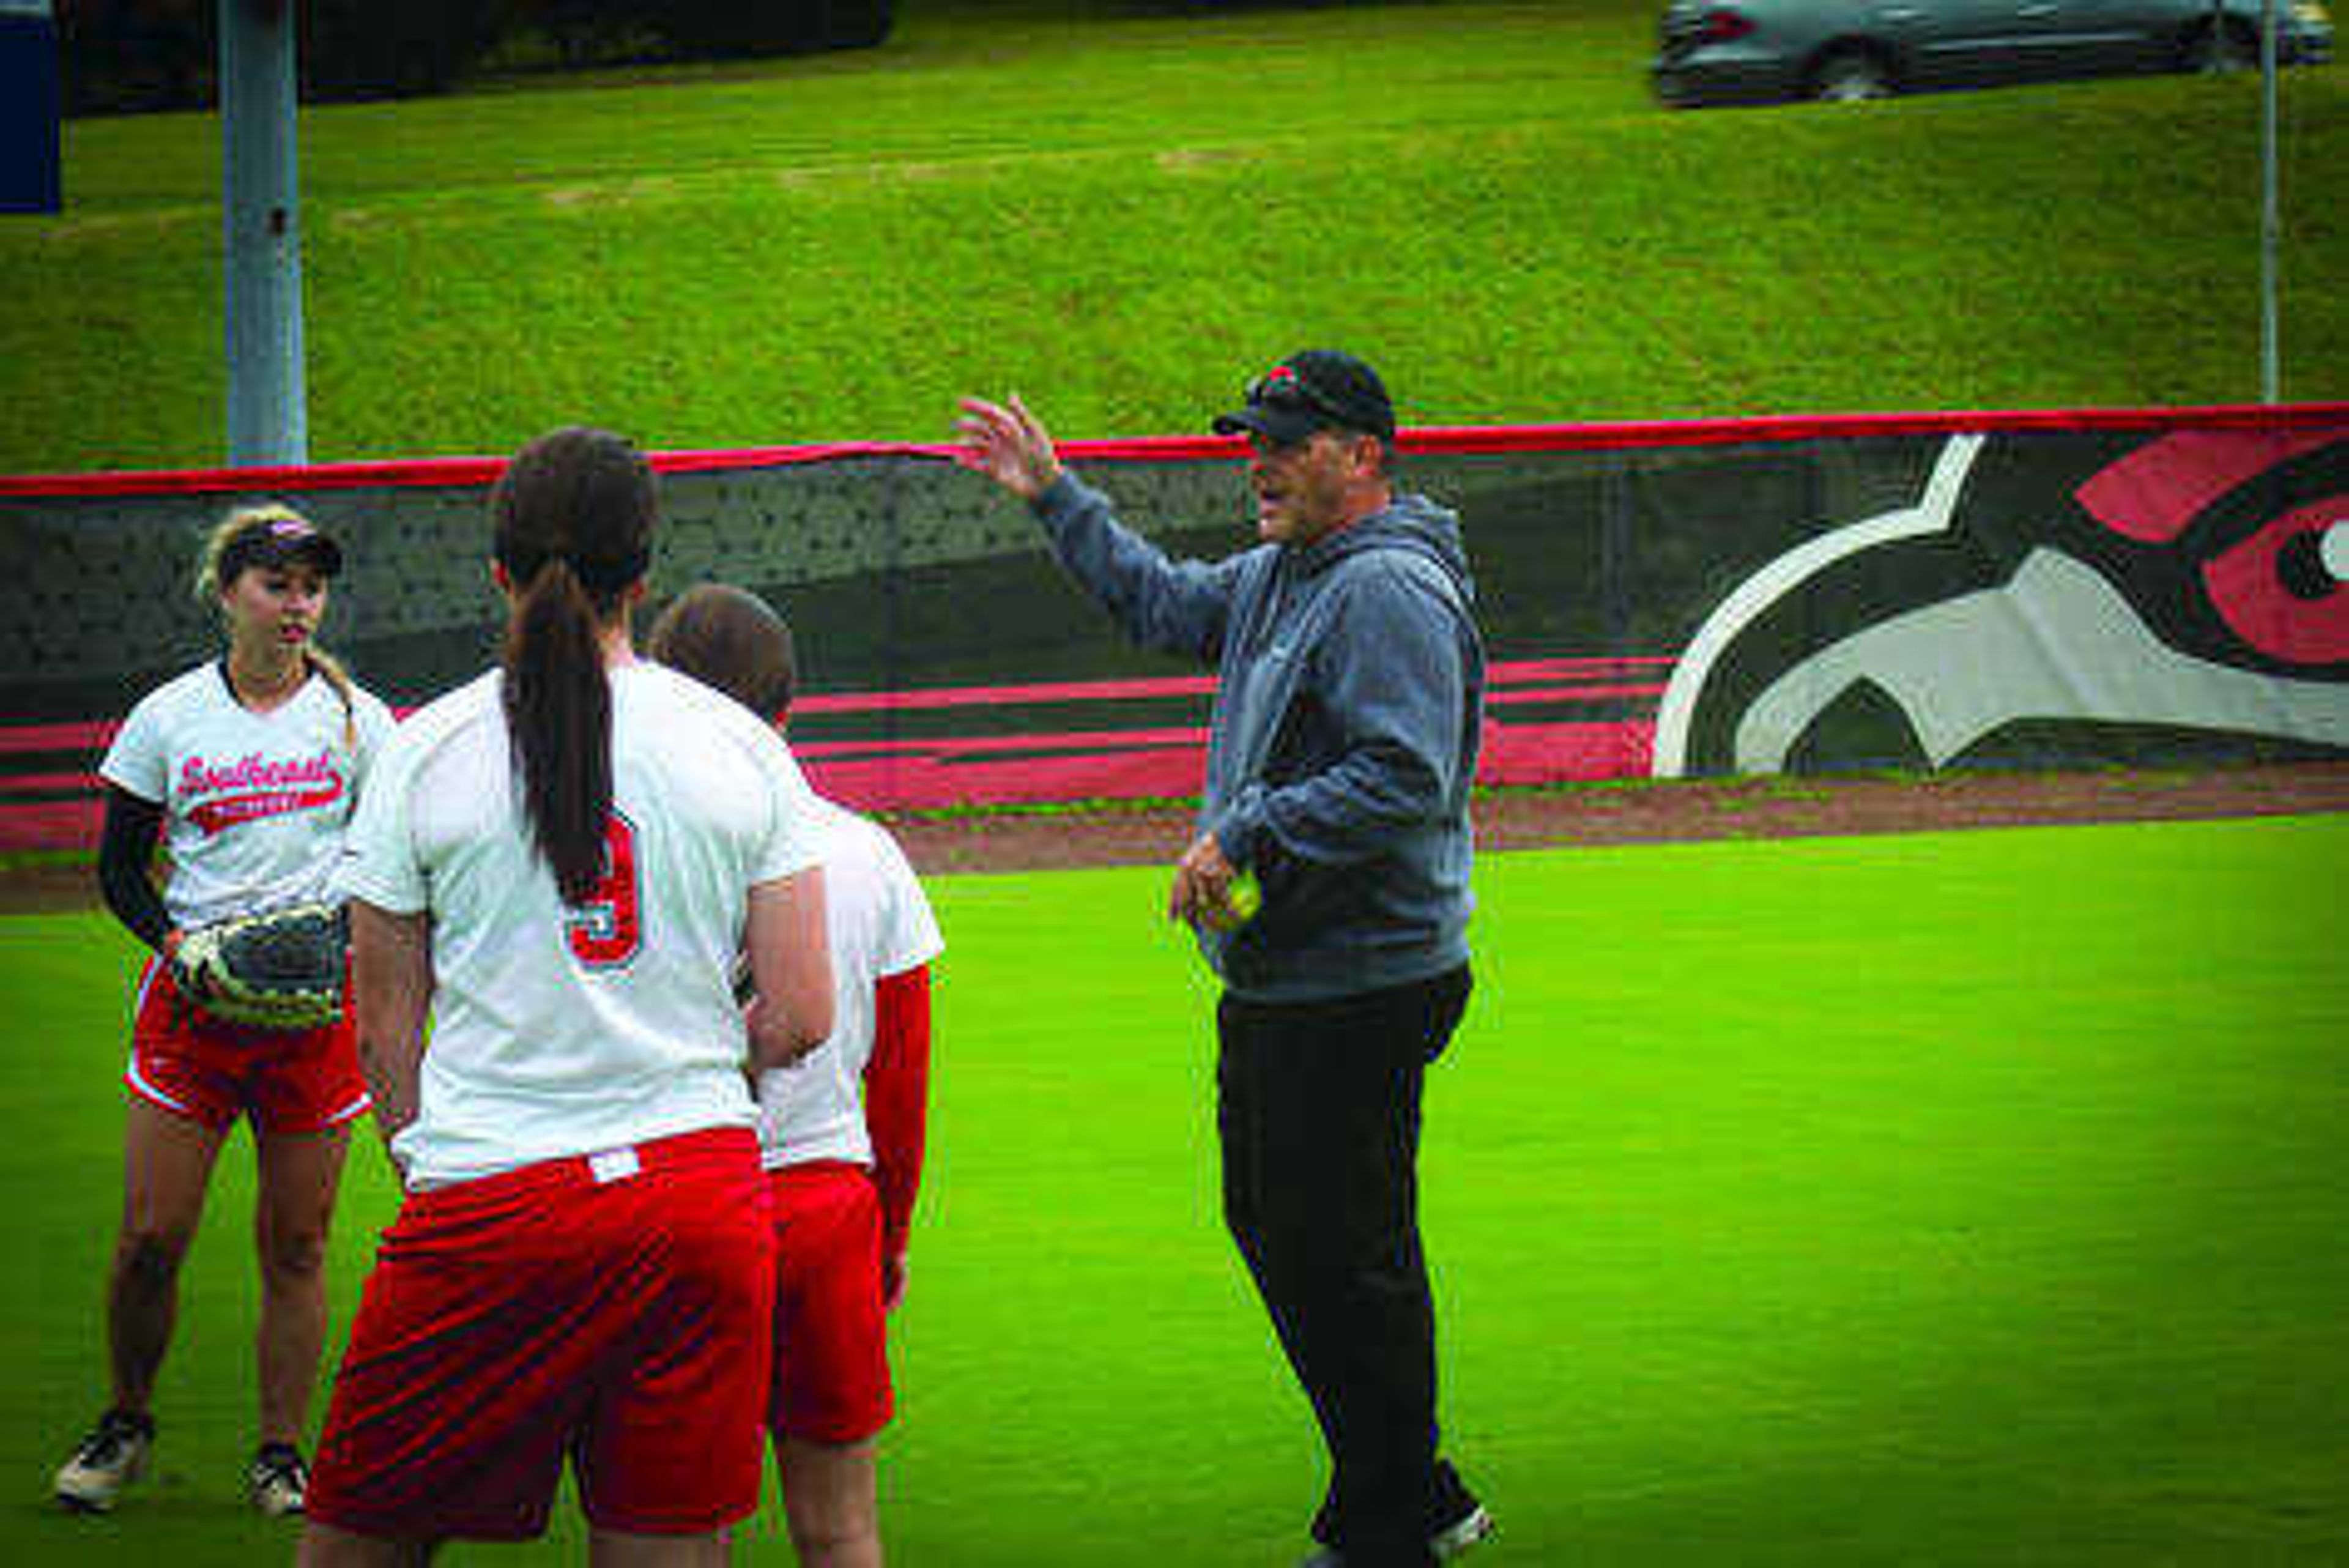 First-year Southeast softball coach Mark Redburn instructs the team at Southeast Softball Complex. Photo by Sean Burke